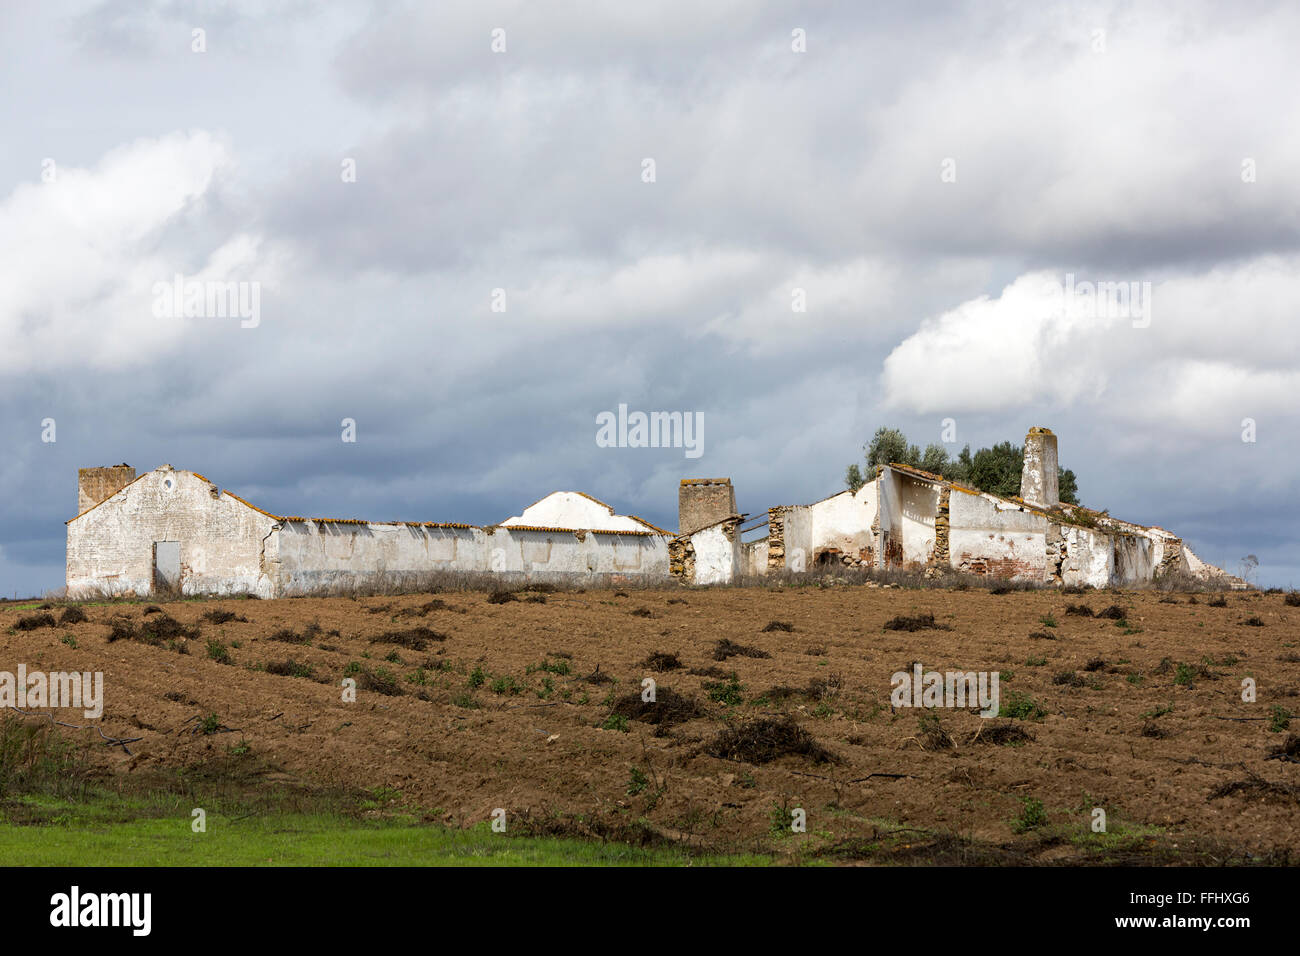 Abandon farm house near Arraiolos, Alentejo Central, Portugal Stock Photo